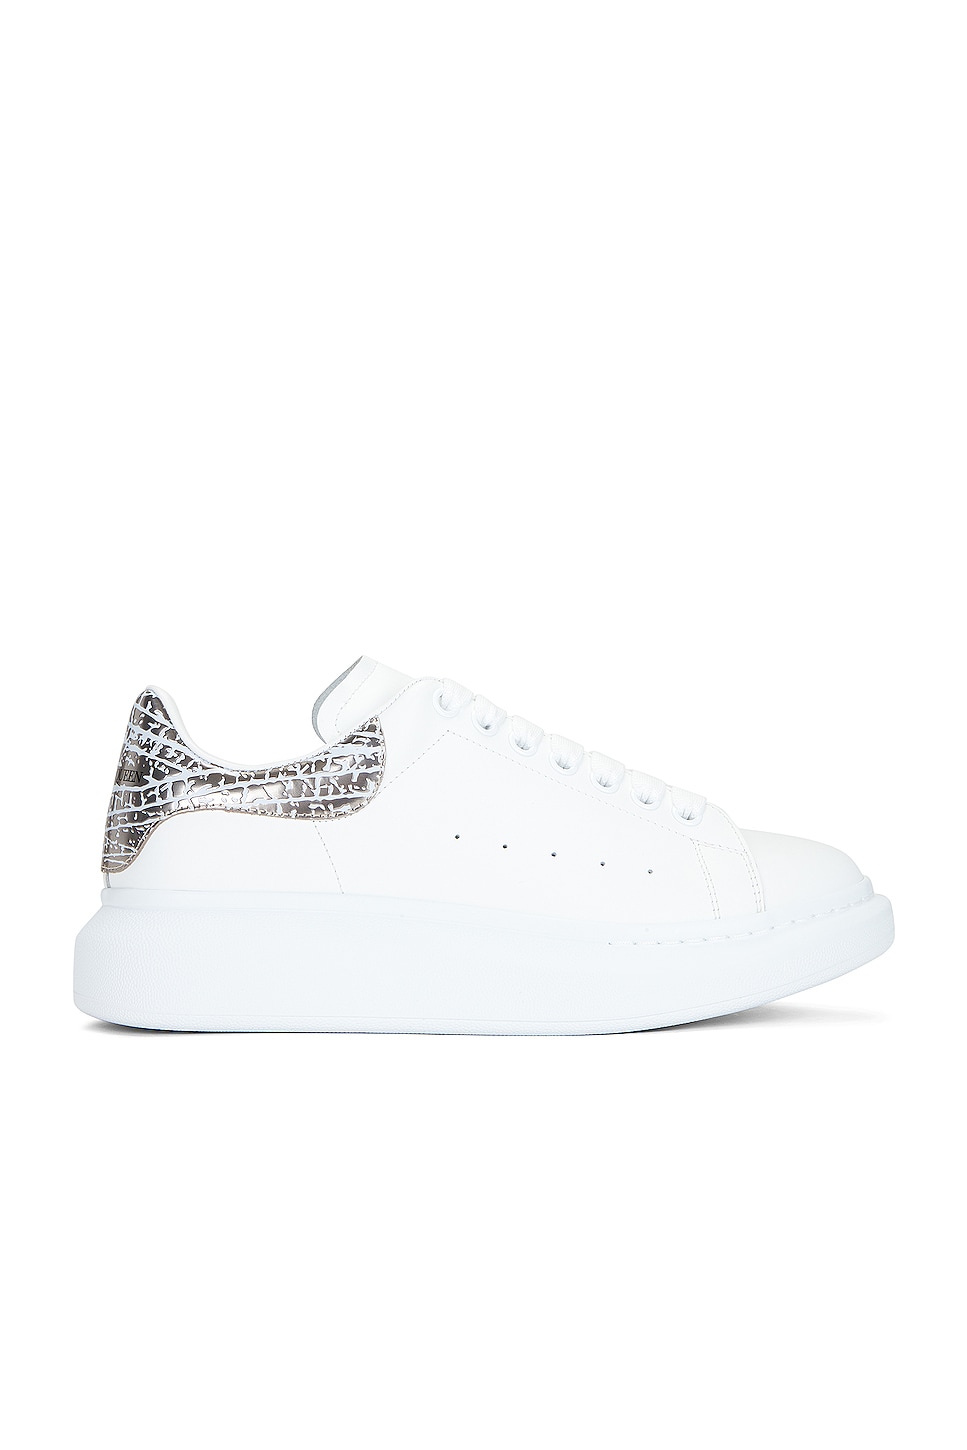 Image 1 of Alexander McQueen Oversized Sneaker in White & Silver